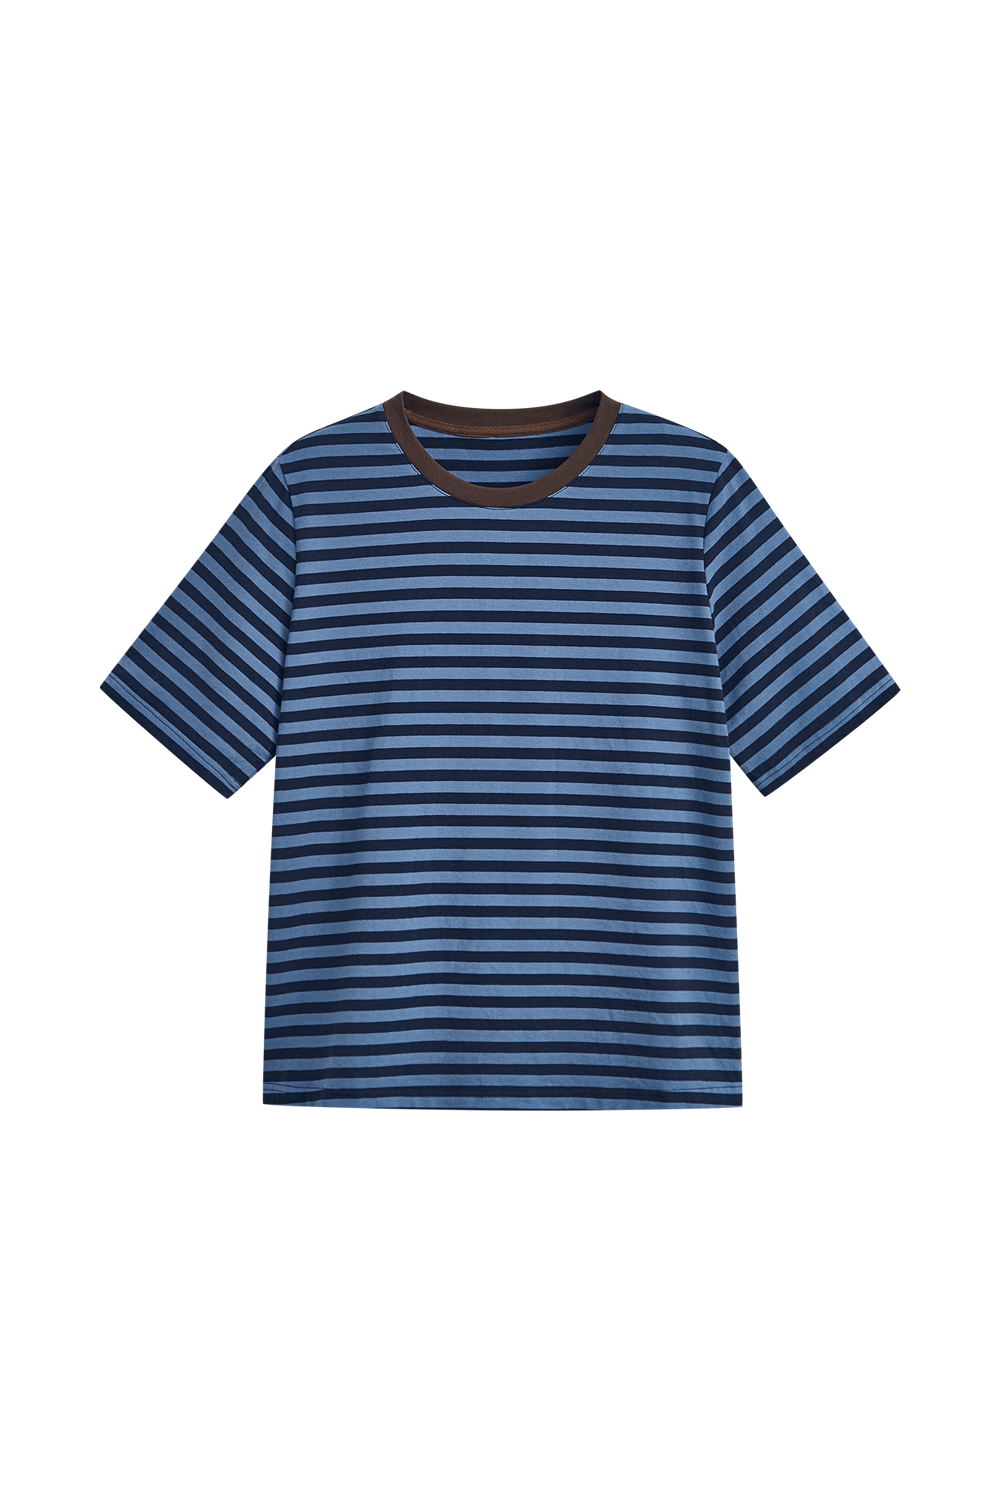 Colorblock striped T-shirt